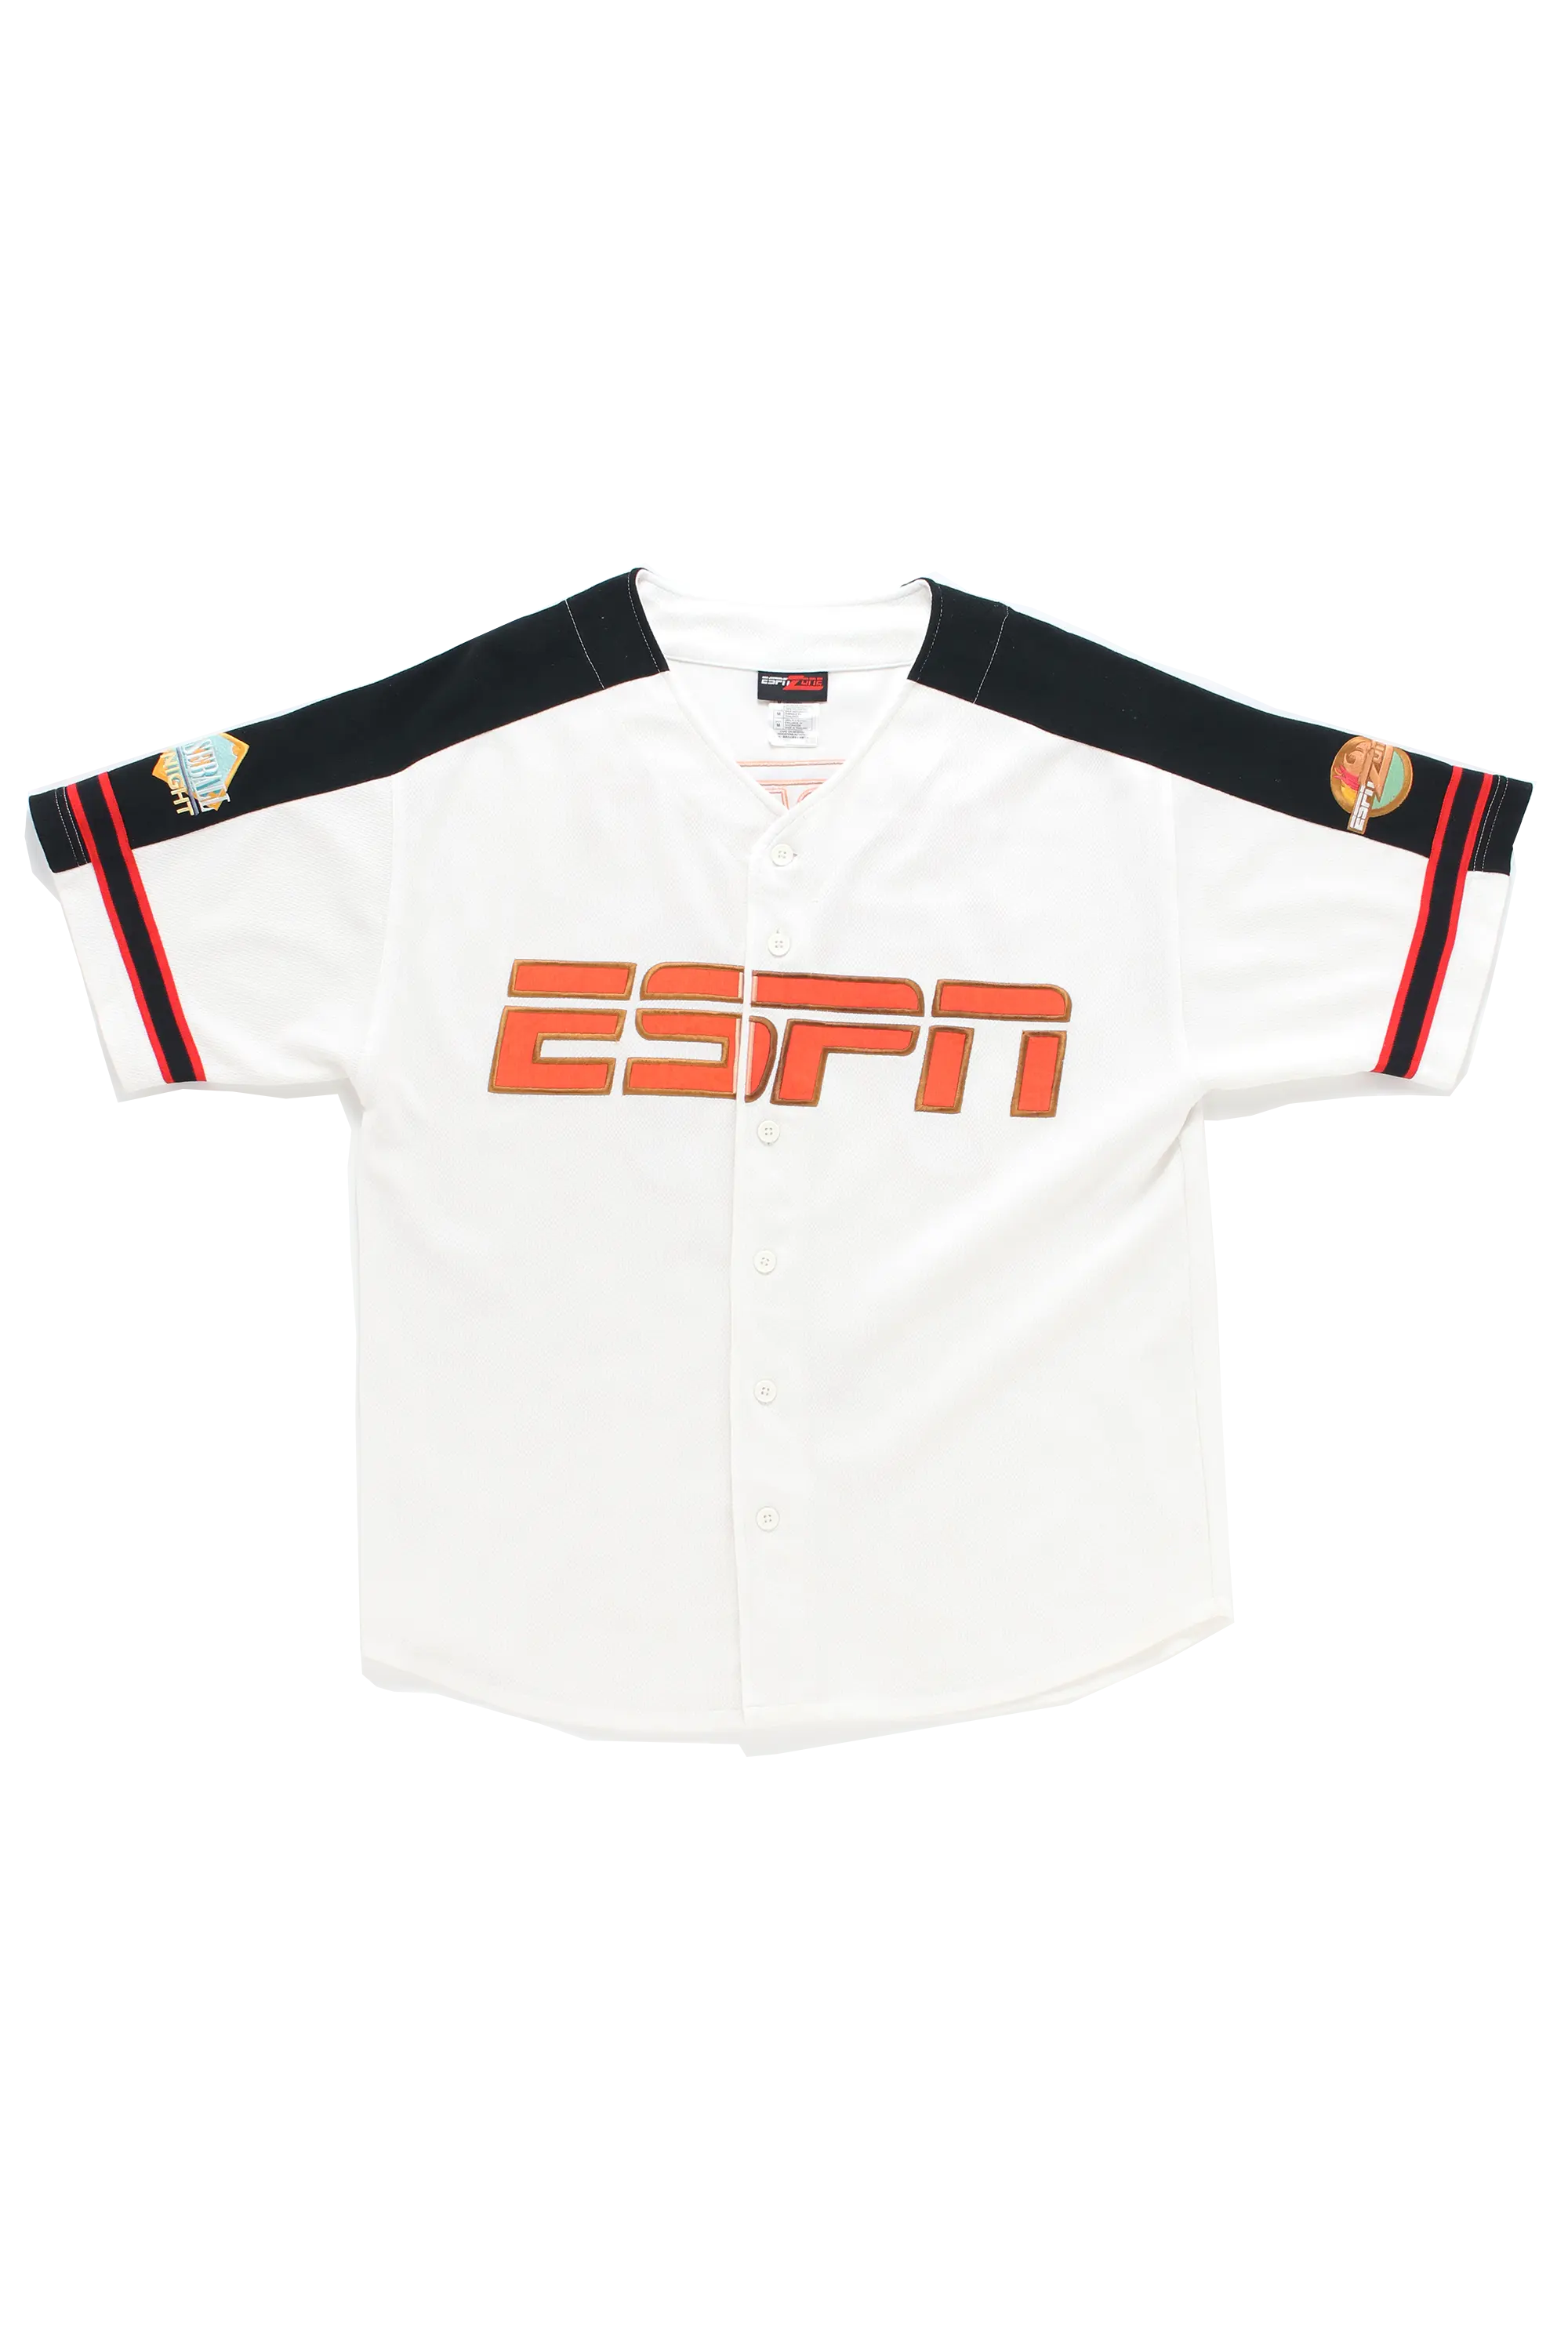 ESPN Baseball Shirt